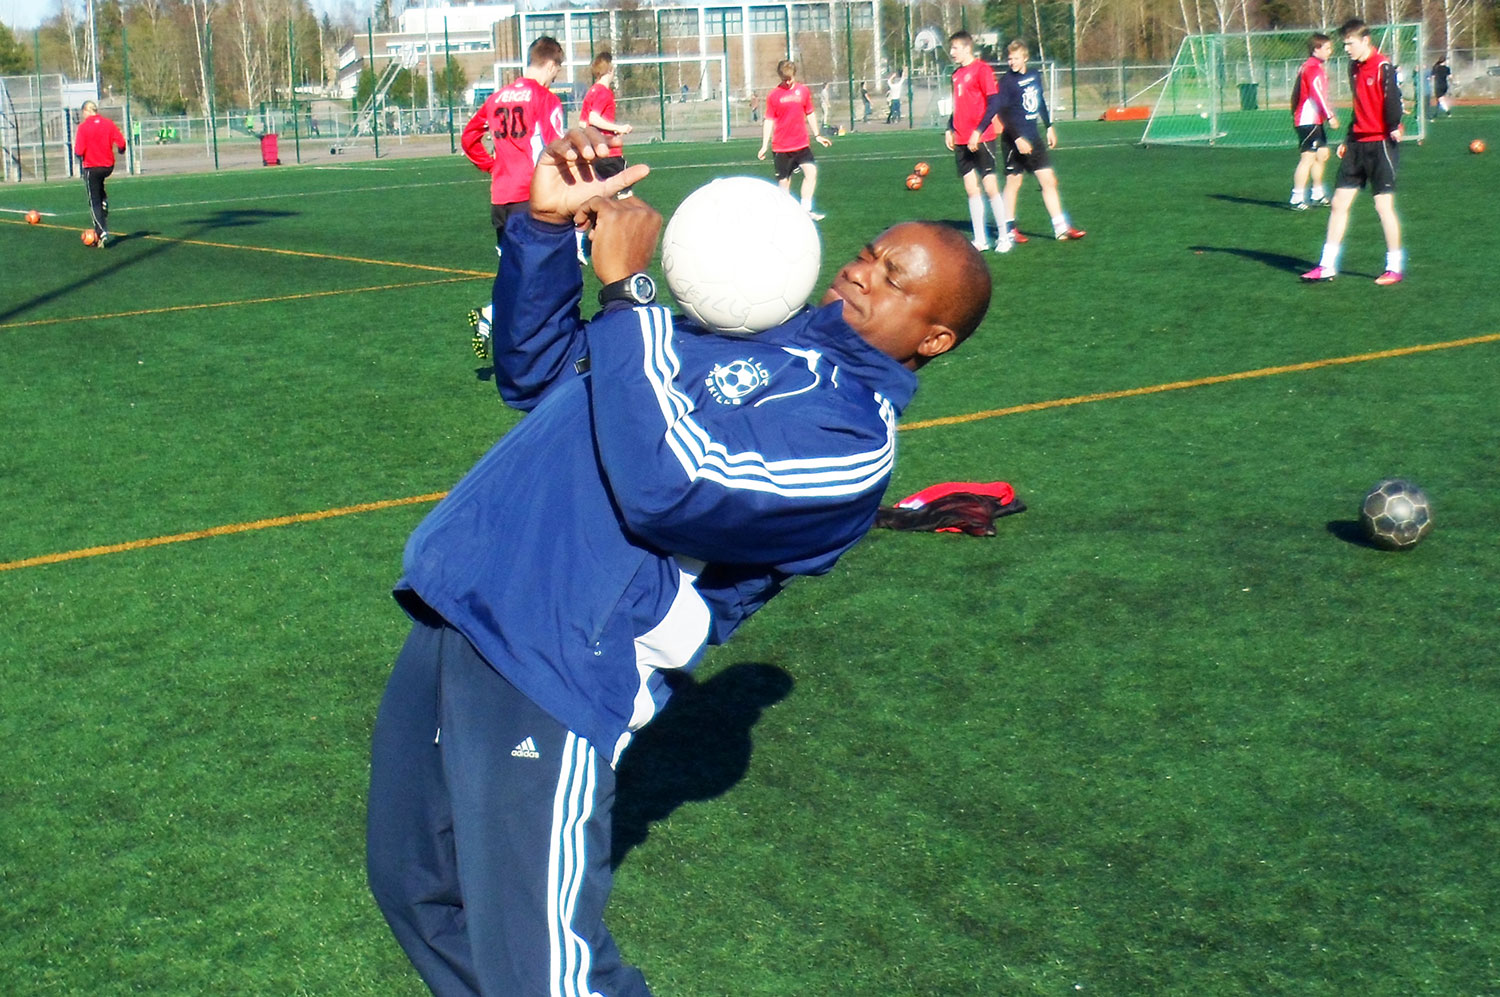 UEFA Licence Coach  Niran Akintimehin (coach Sunny) demonstrating skills